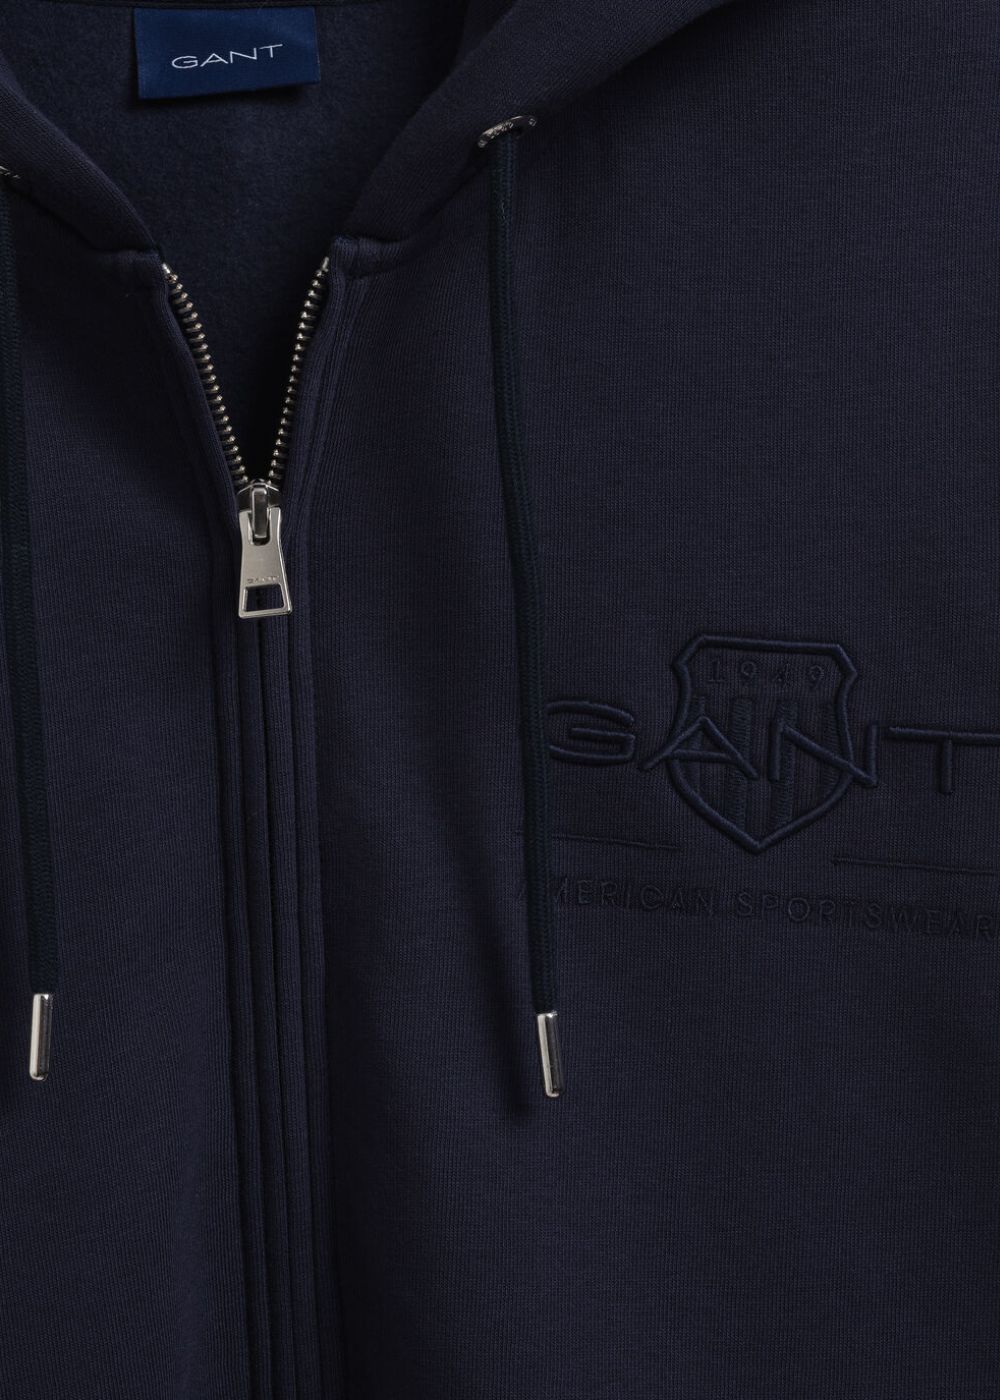 Gant - Tonal archive shield zip hoodie - Julia Hultgren